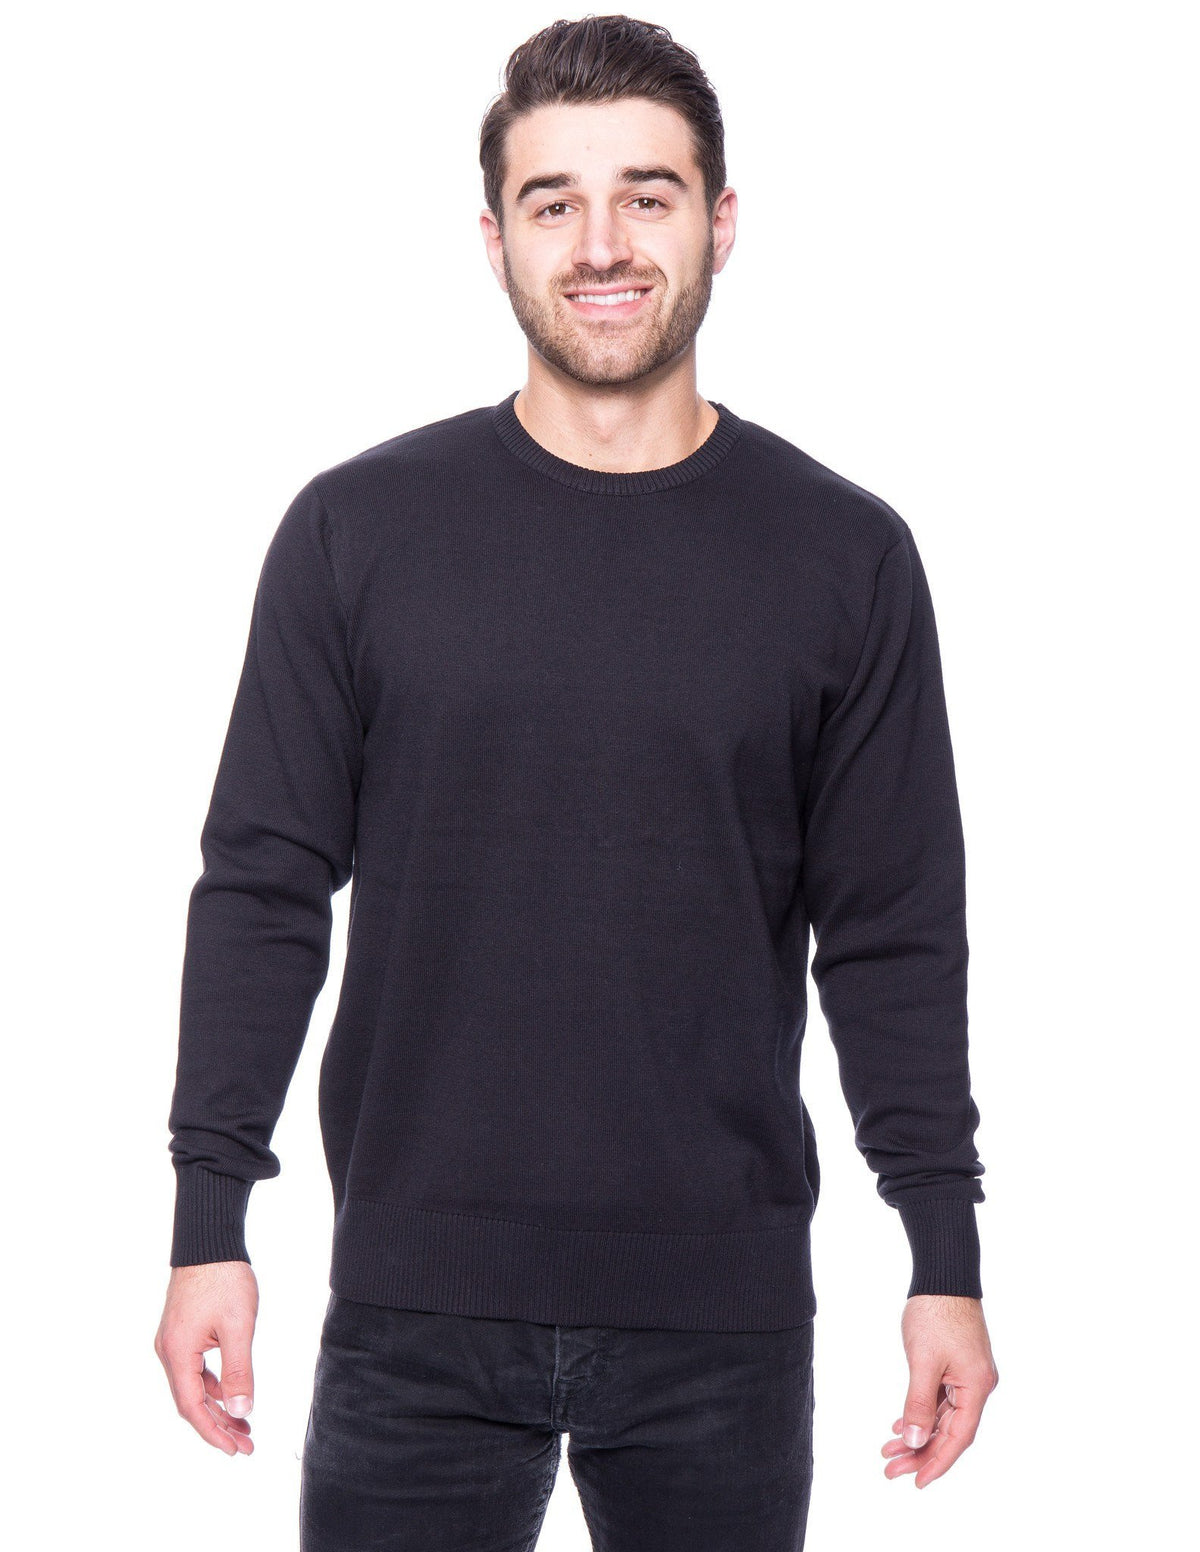 Men's 100% Cotton Crew Neck Sweater - Black